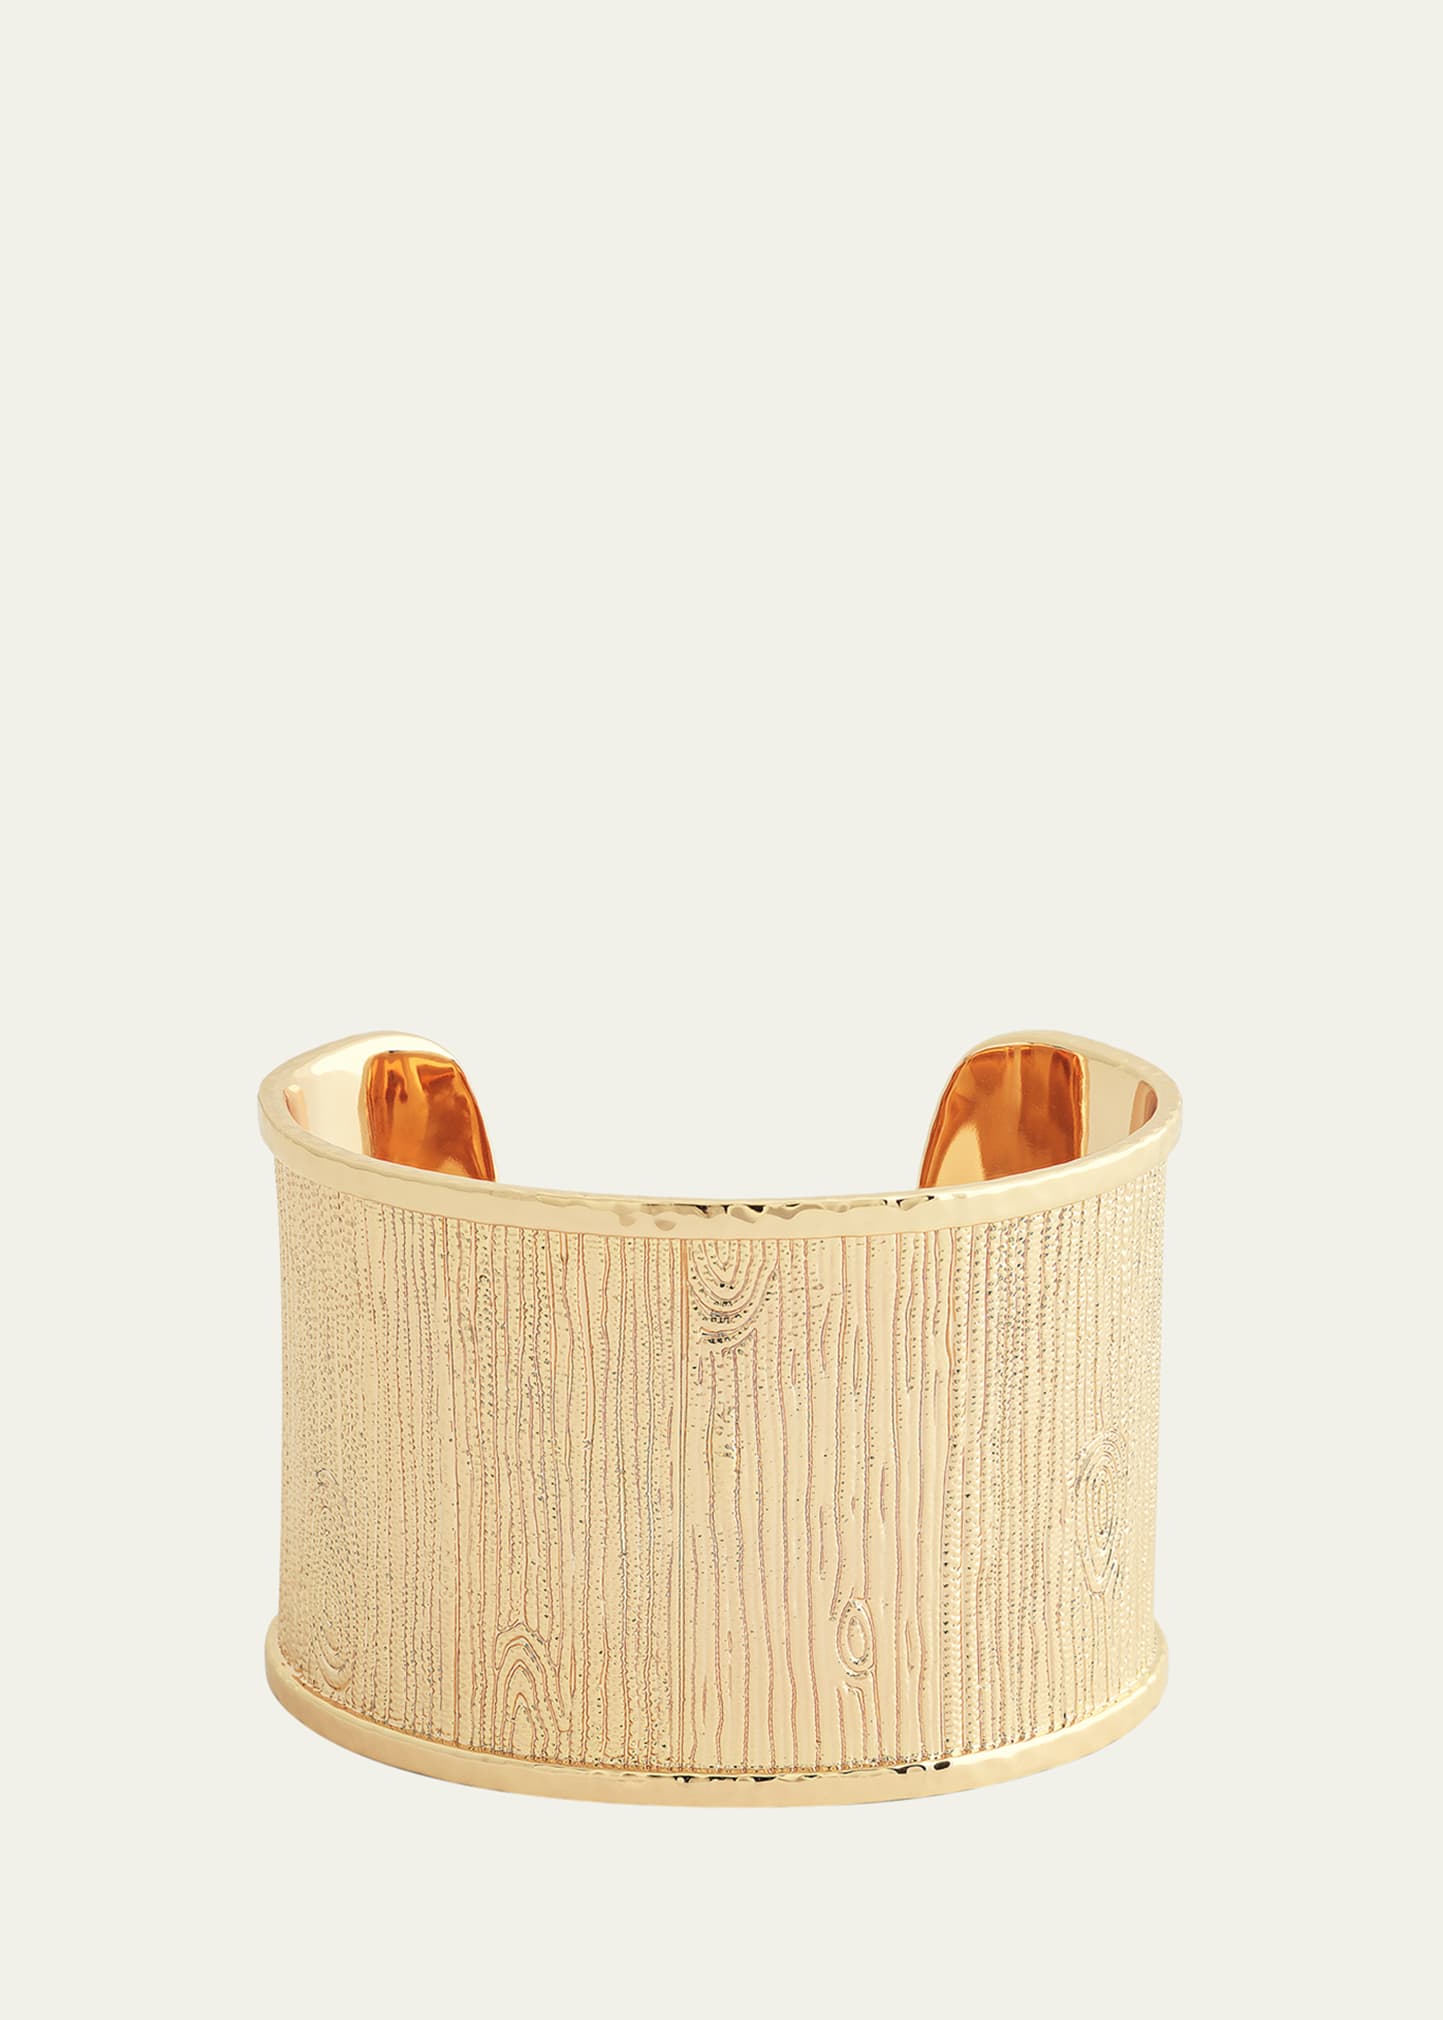 Enchanted Forest Bark Cuff Bracelet